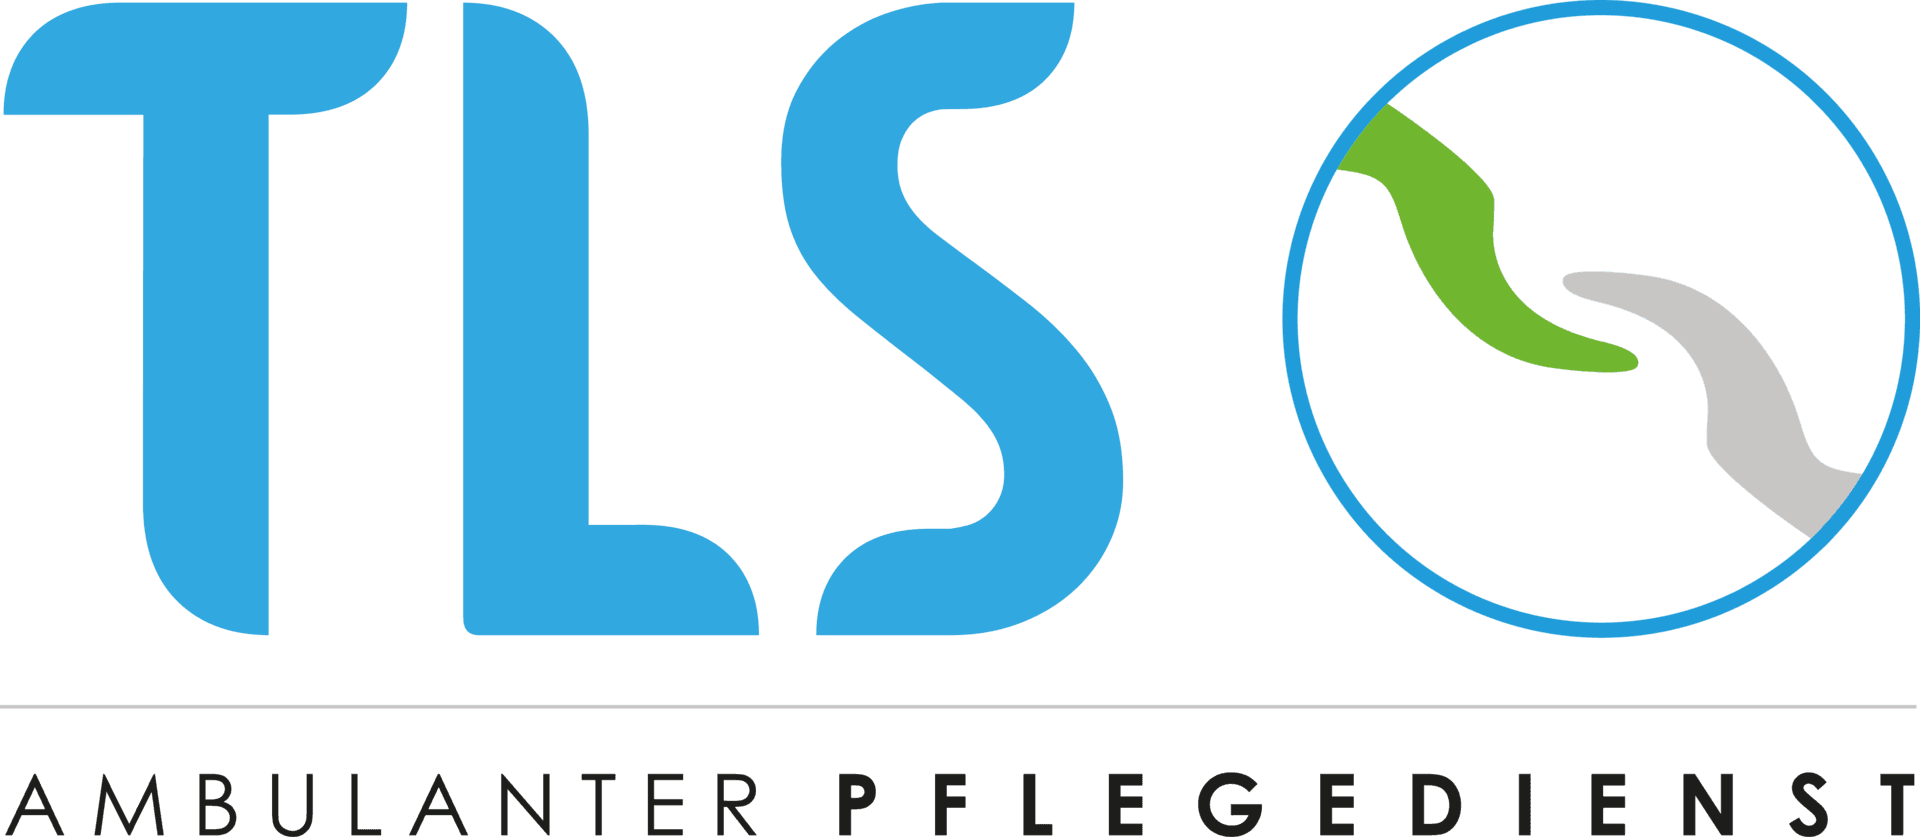 Logo: TLS Pflegedienst GmbH & Co KG